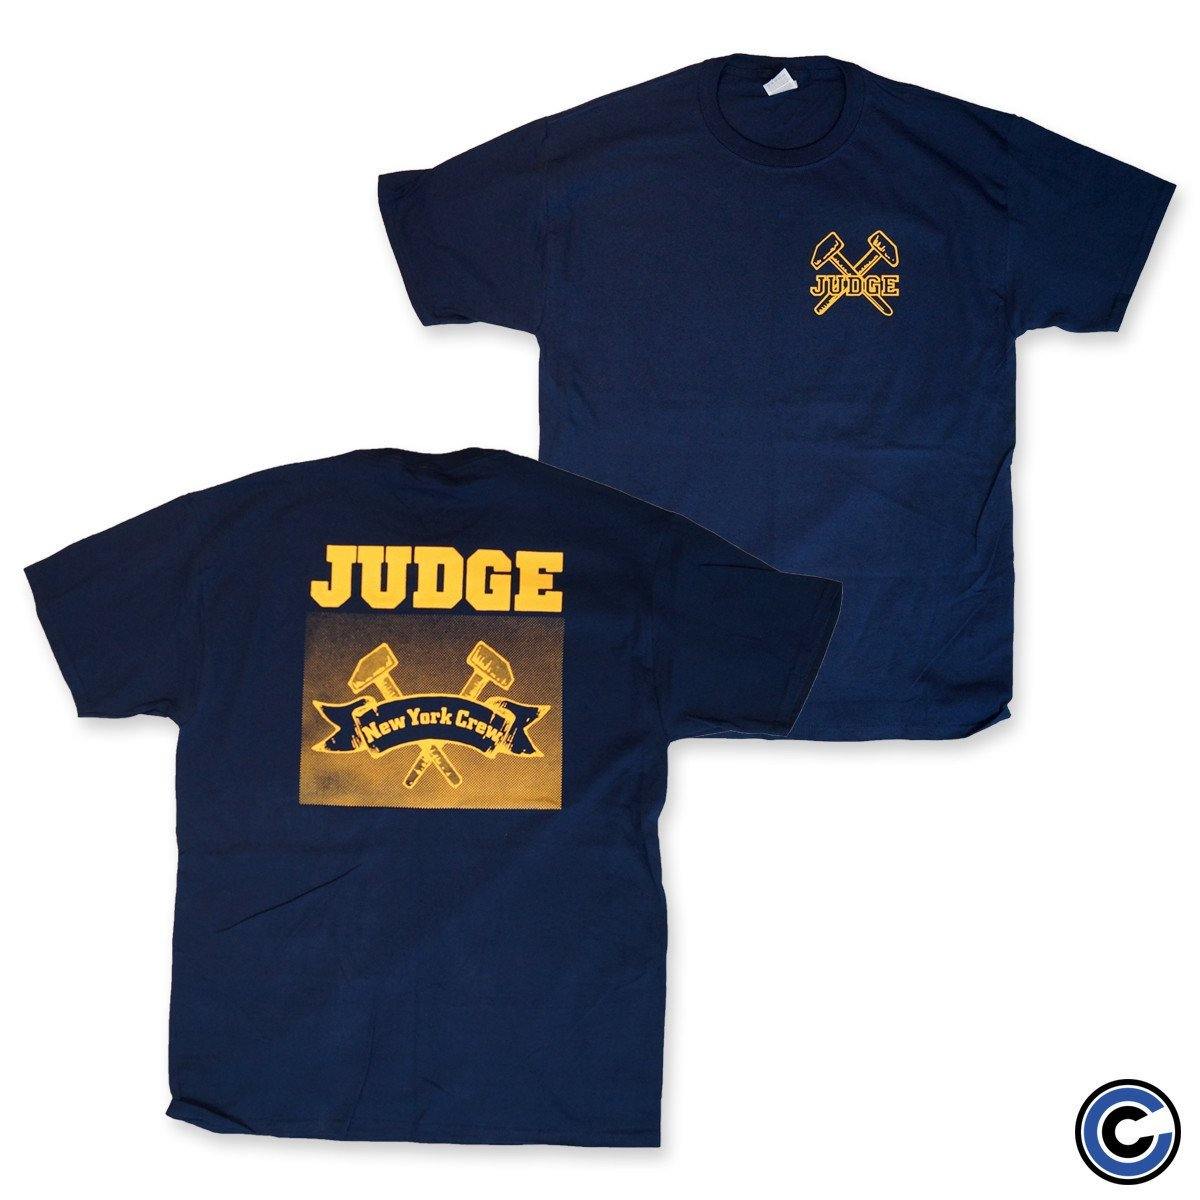 Buy – Judge "New York Crew" Shirt – Band & Music Merch – Cold Cuts Merch